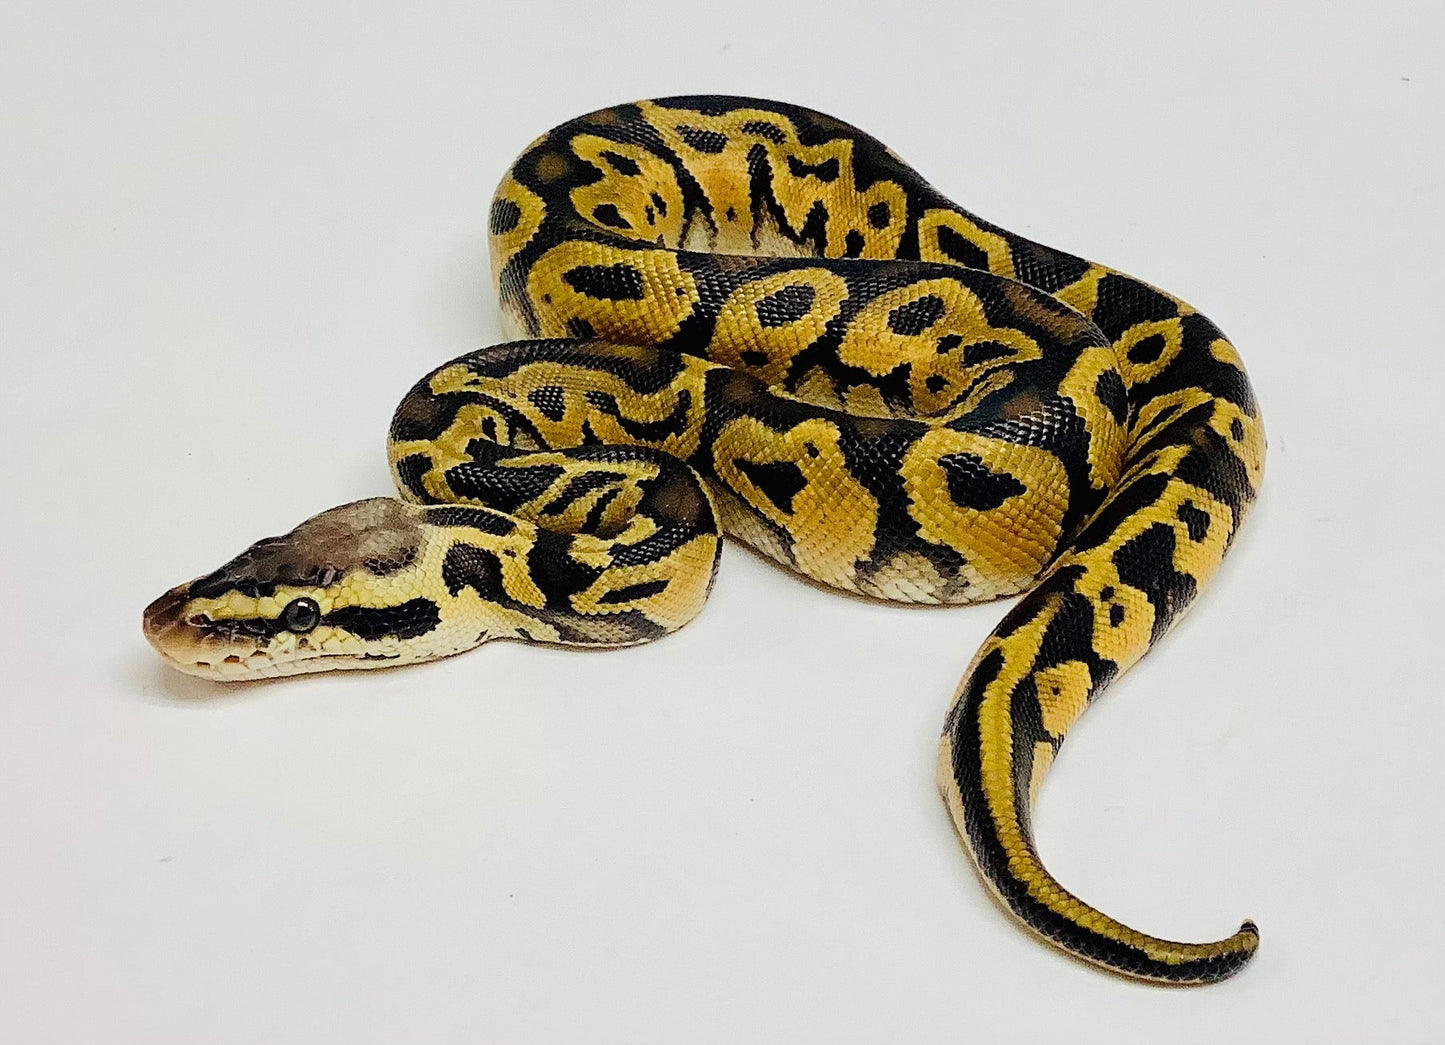 Pastel Leopard Het Clown Ball Python - Male #2021M01-1